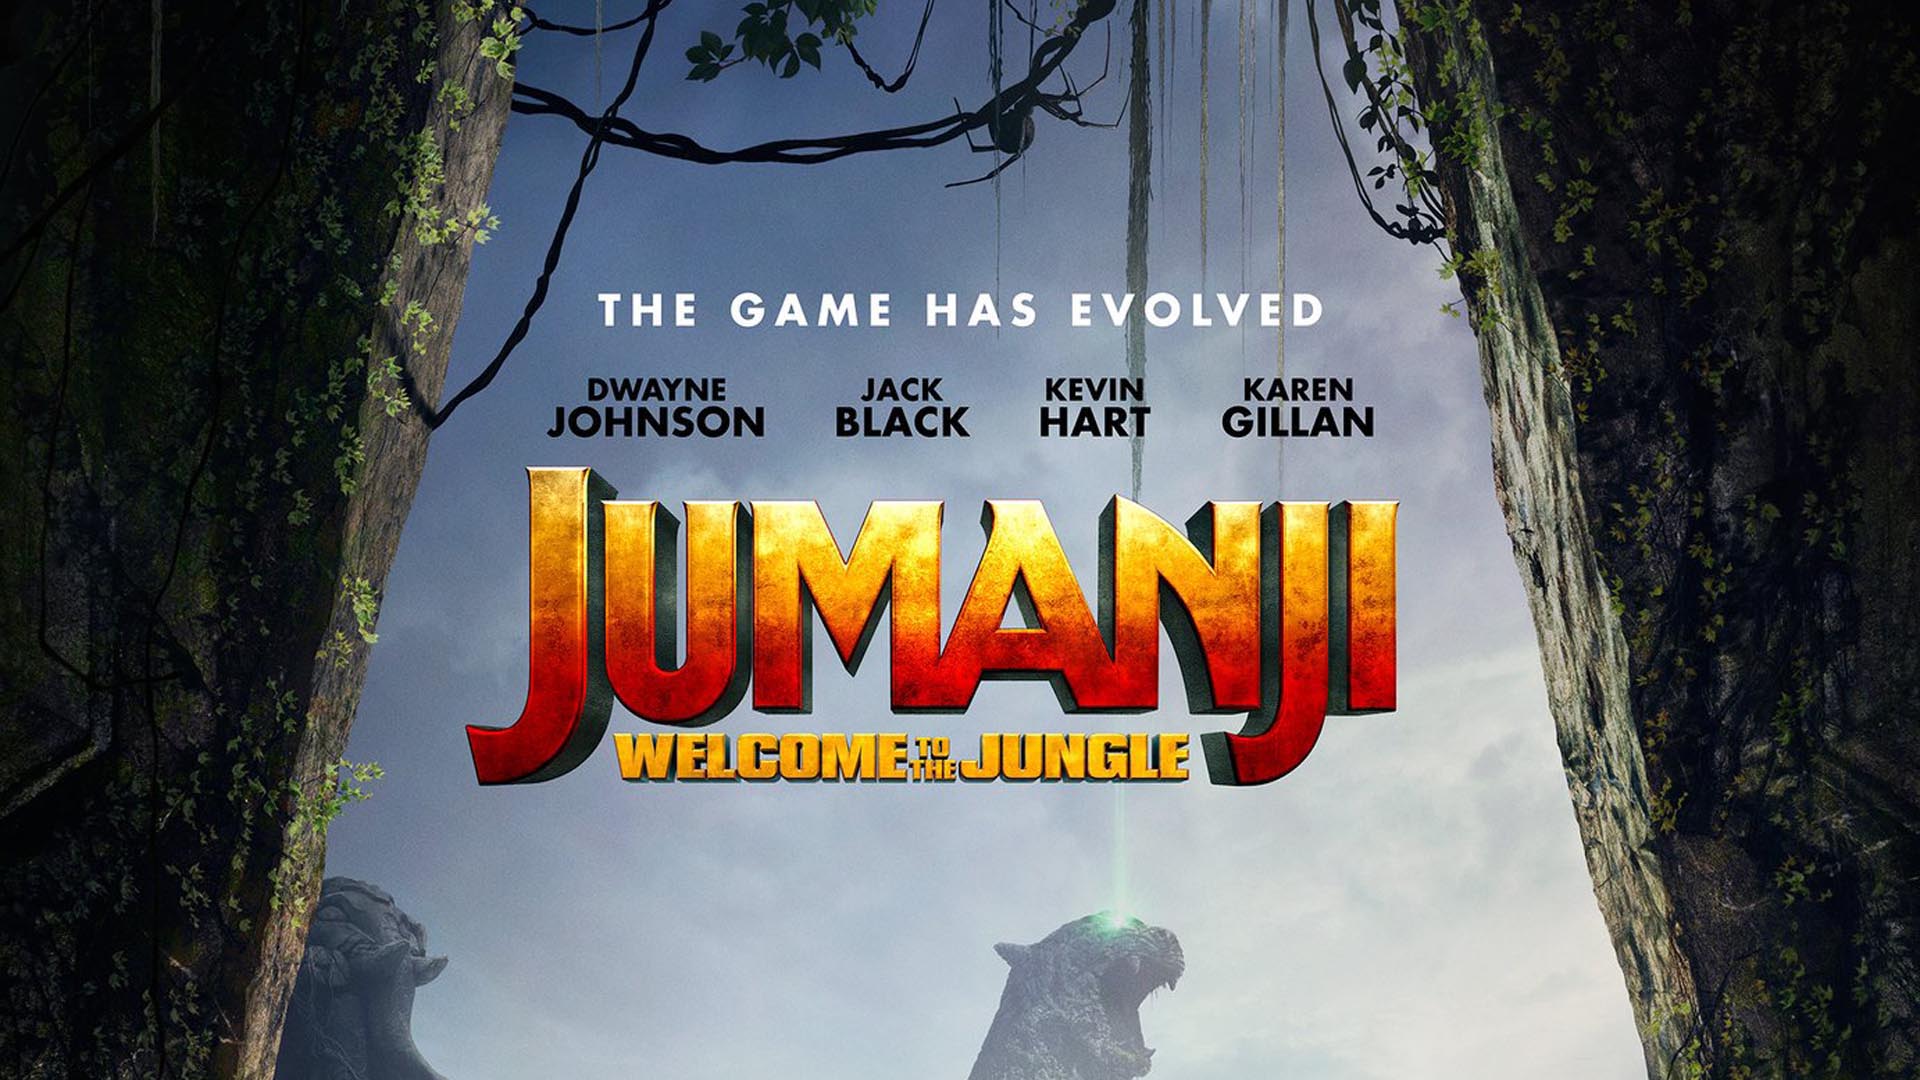 Jumanji Welcome to the Jungle Movie Wallpaper 62107 1920x1080 px